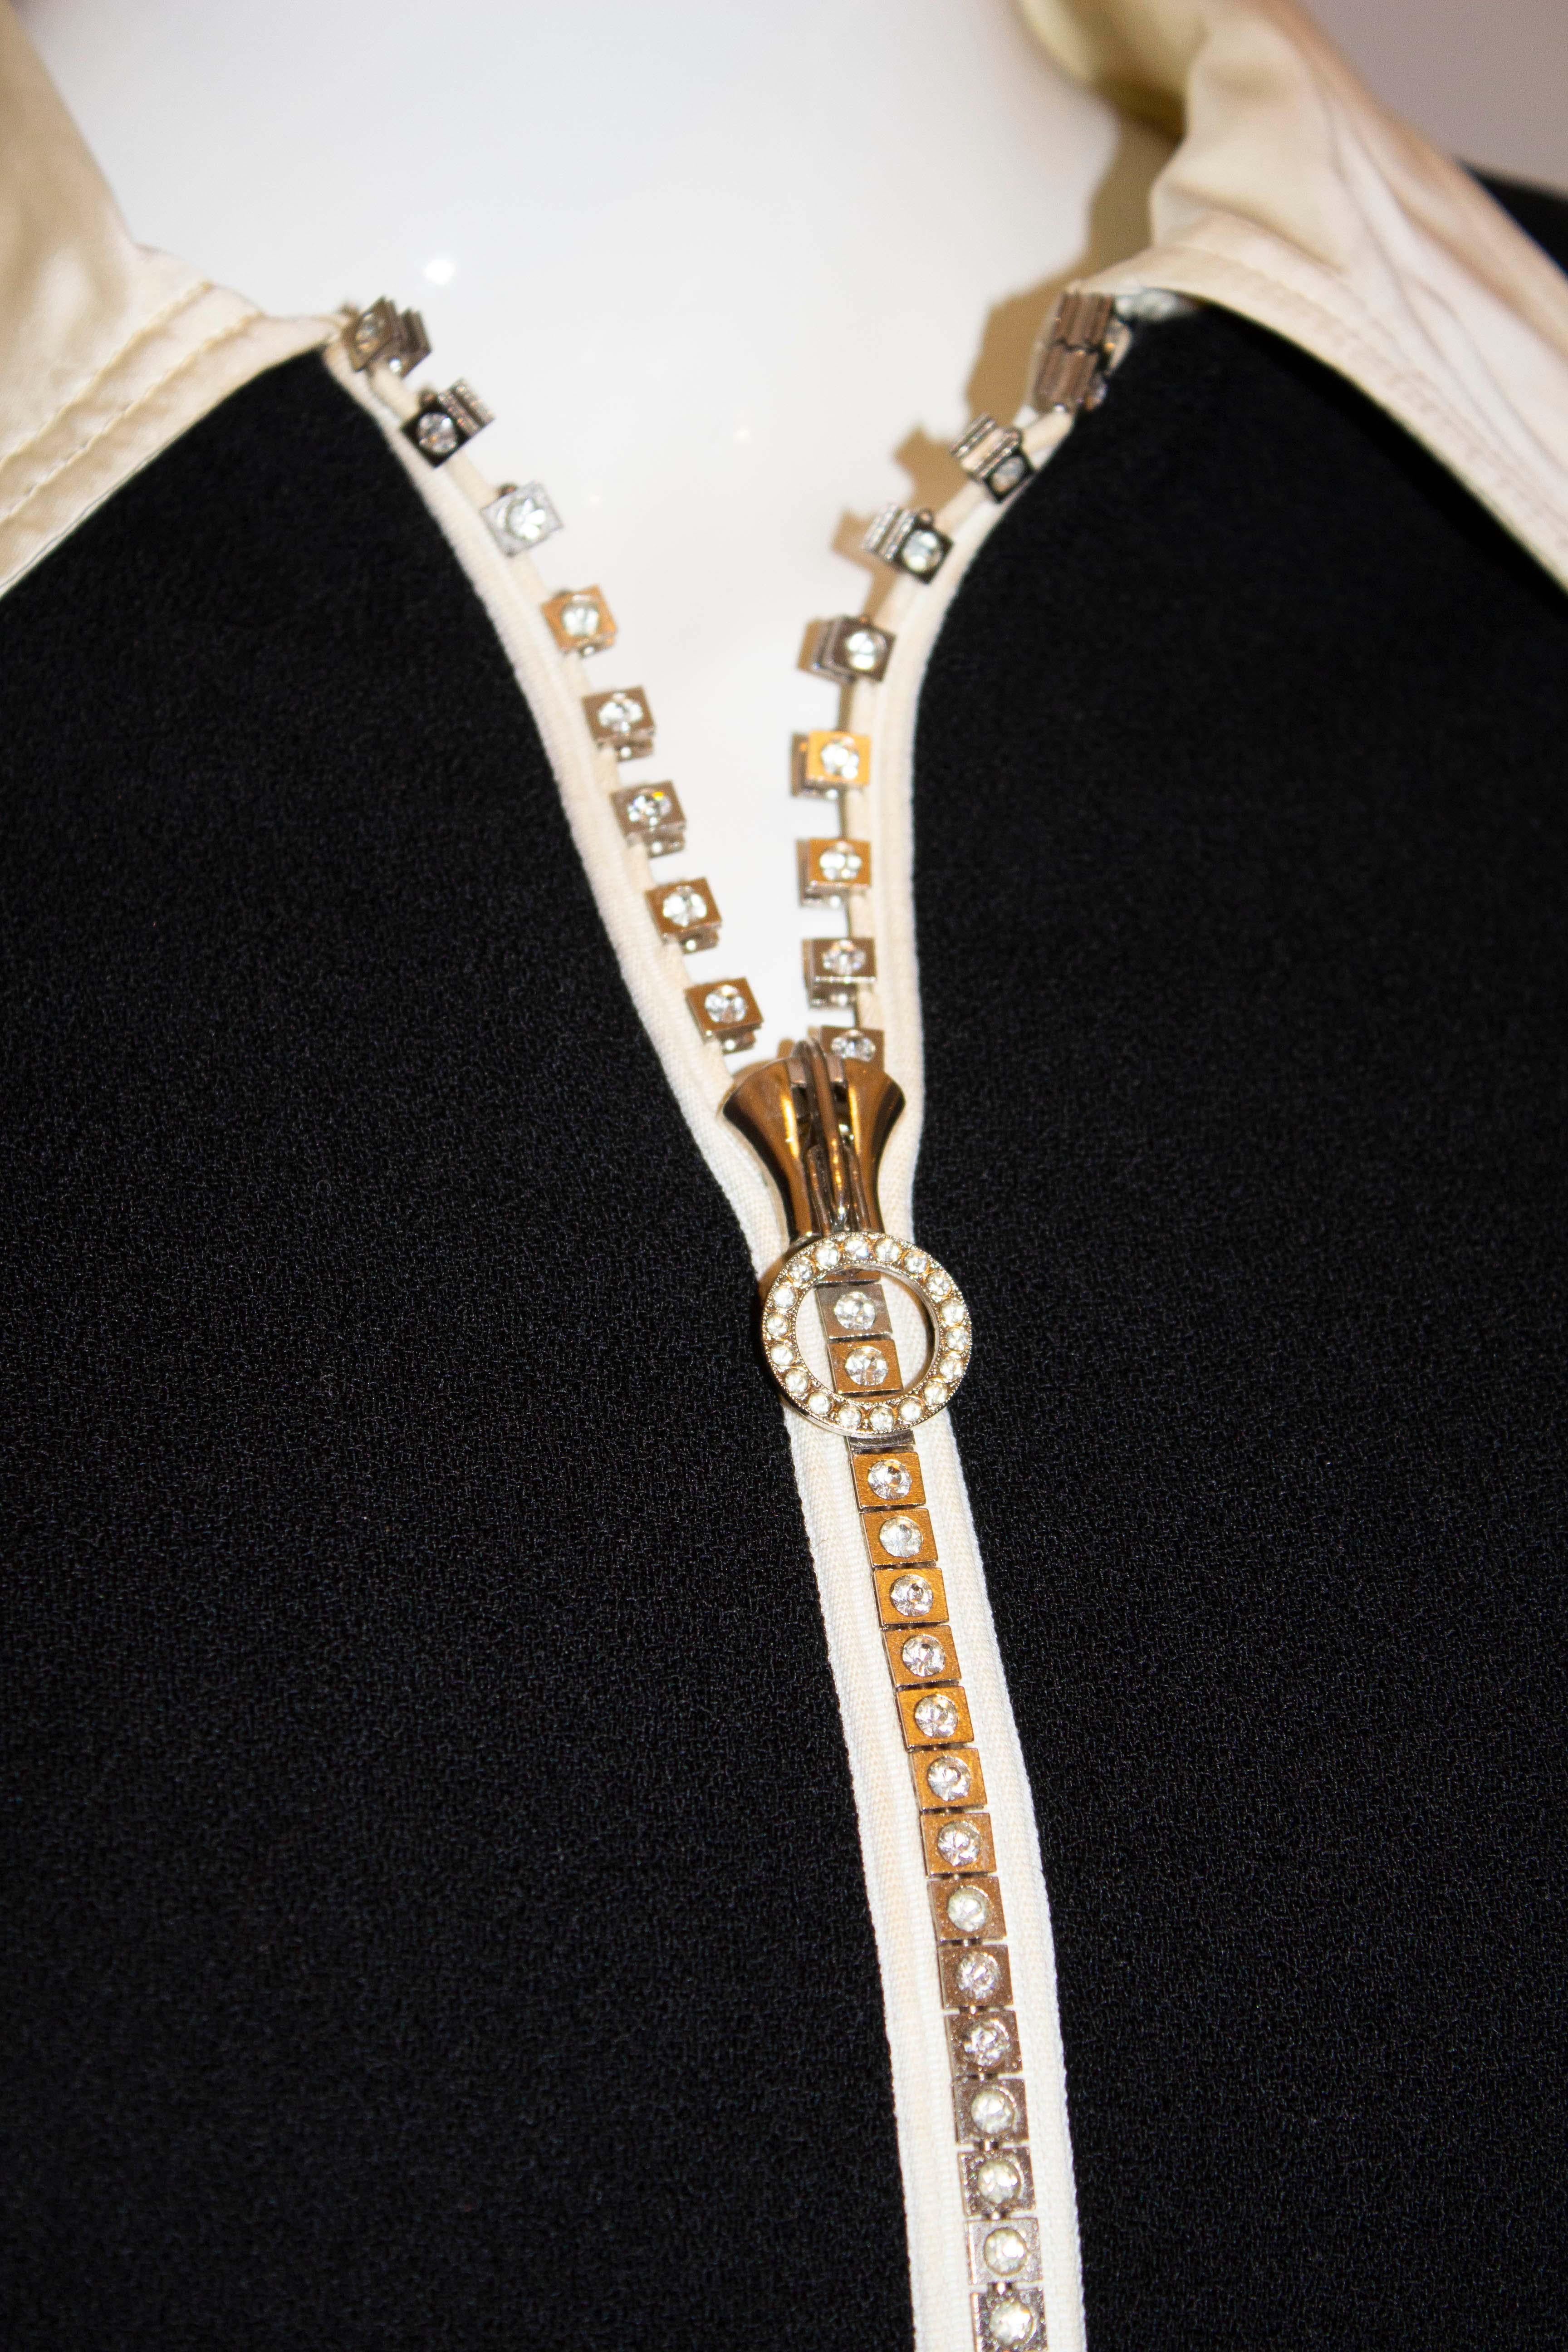 Vintage Oscar de la Renta Dress with wonderful zip 1